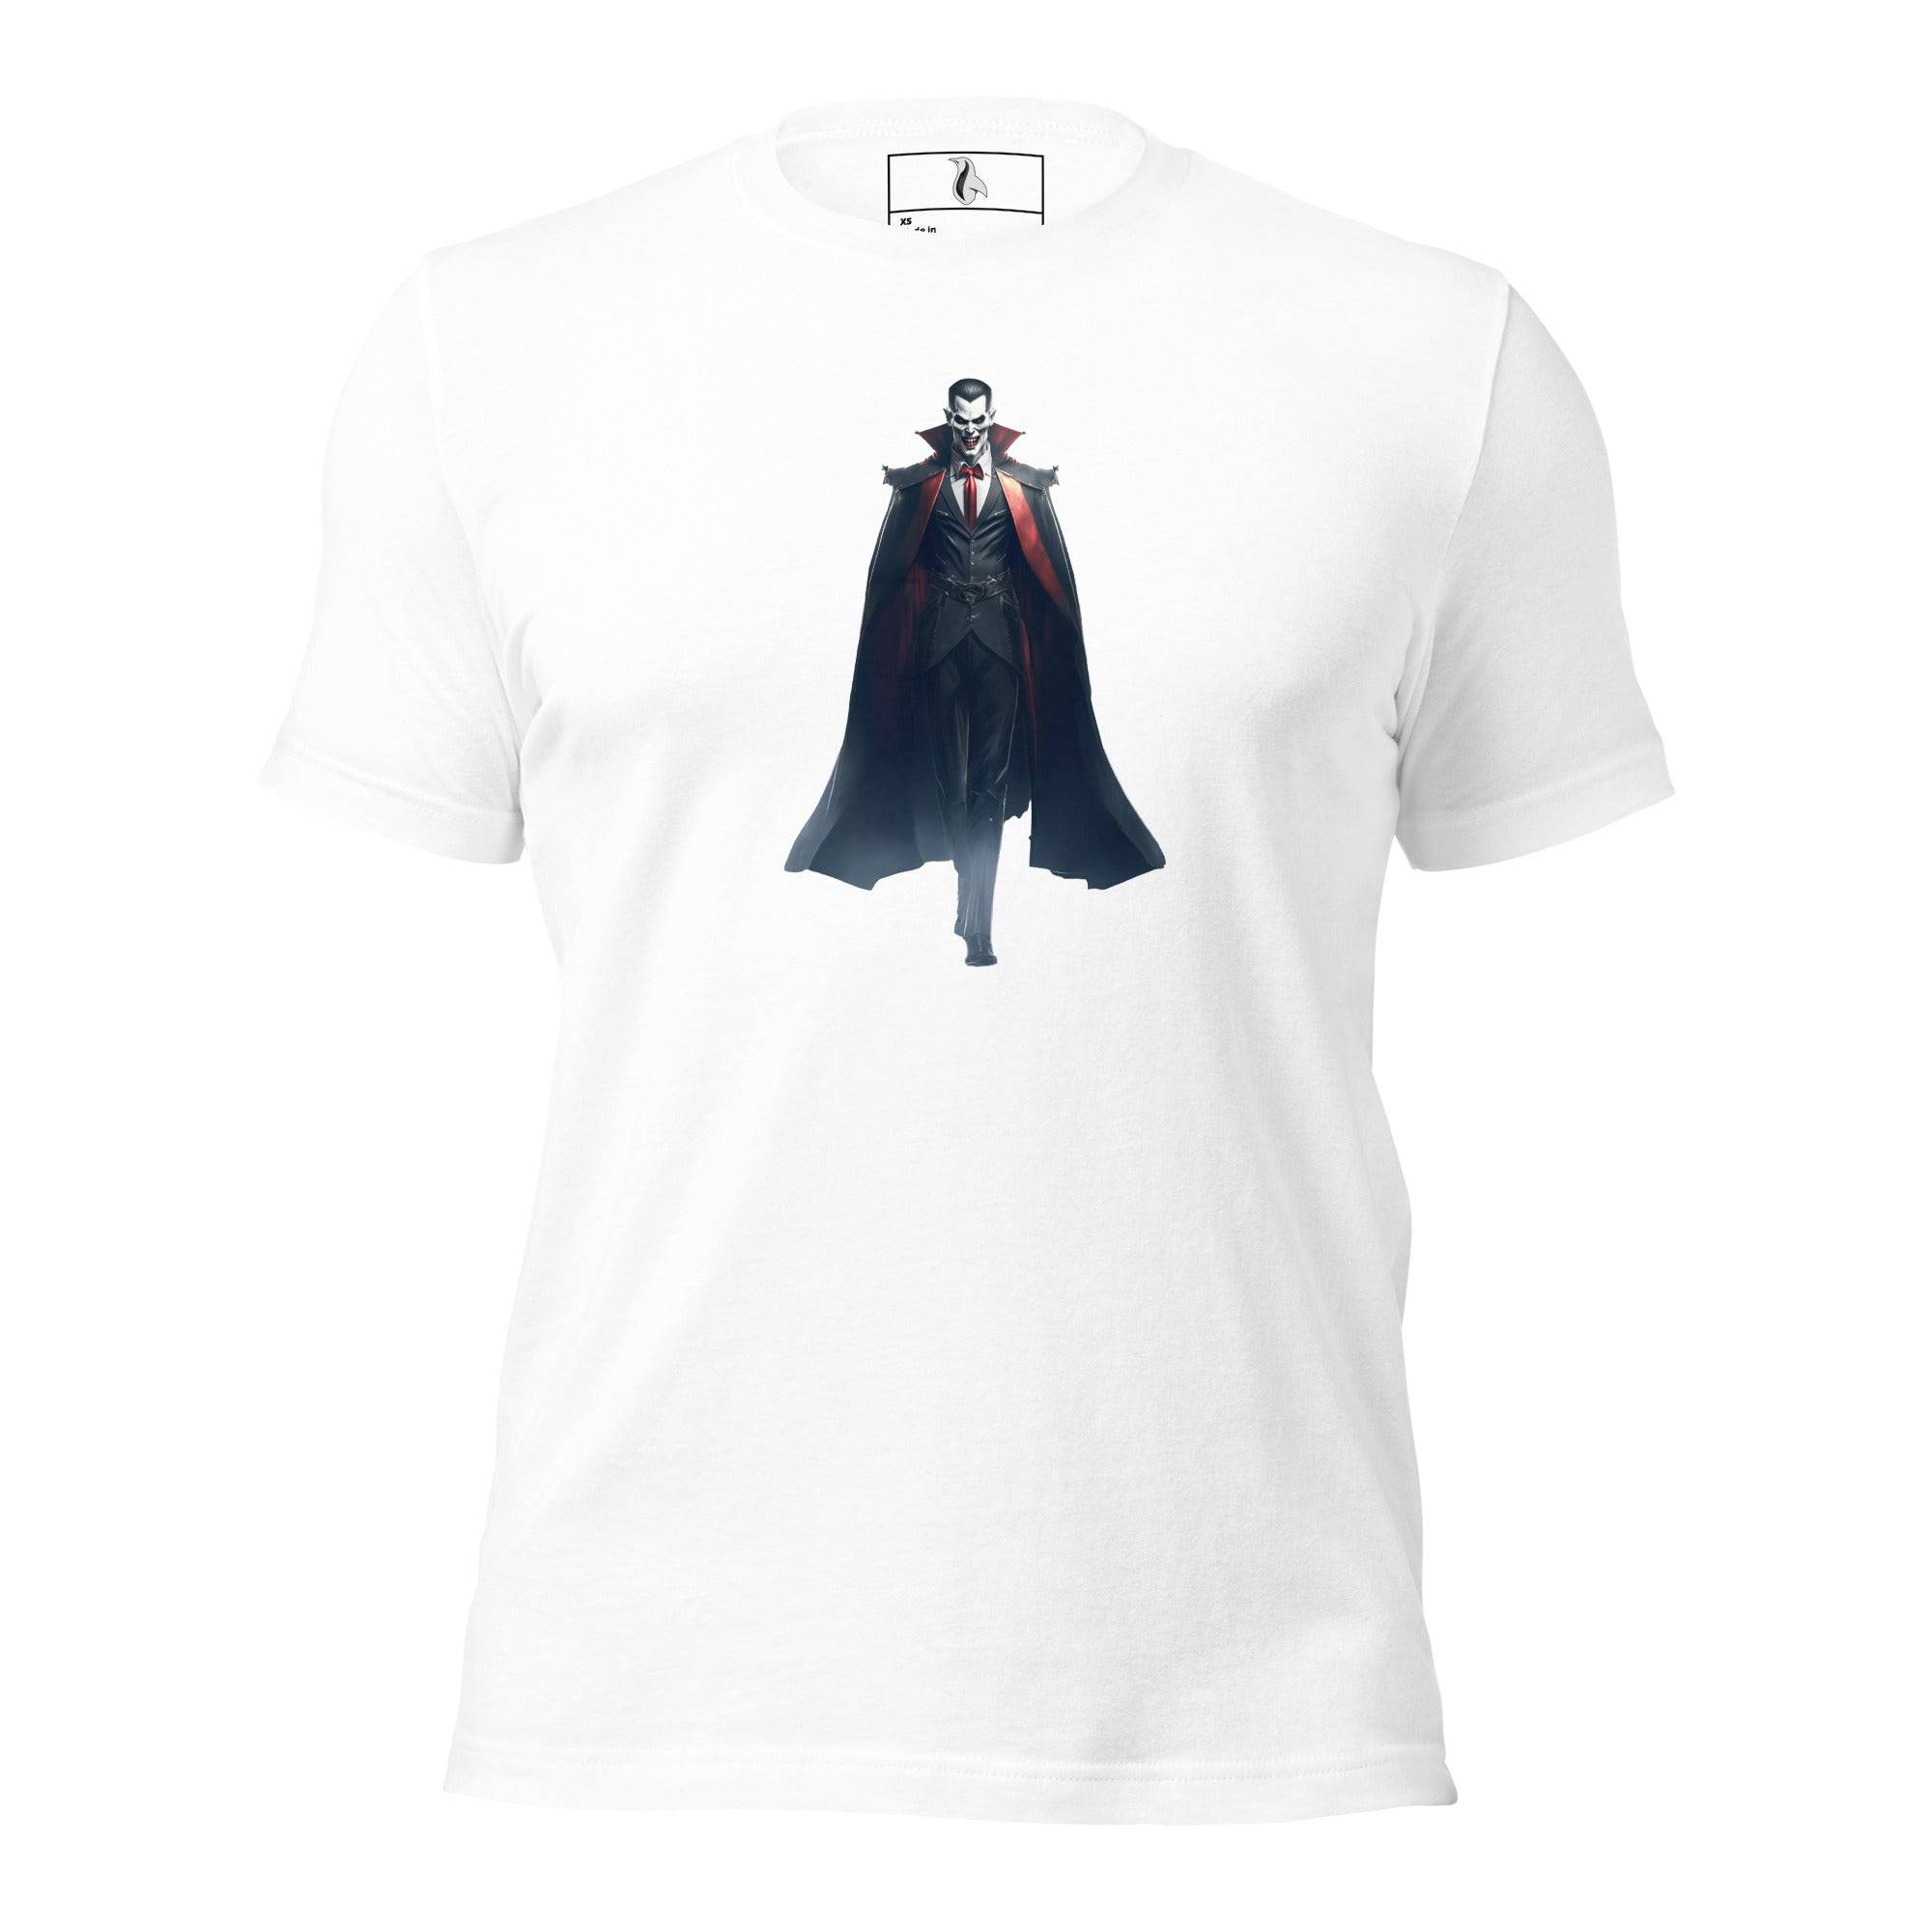 The Monster Squad "Dracula" Unisex t-shirt